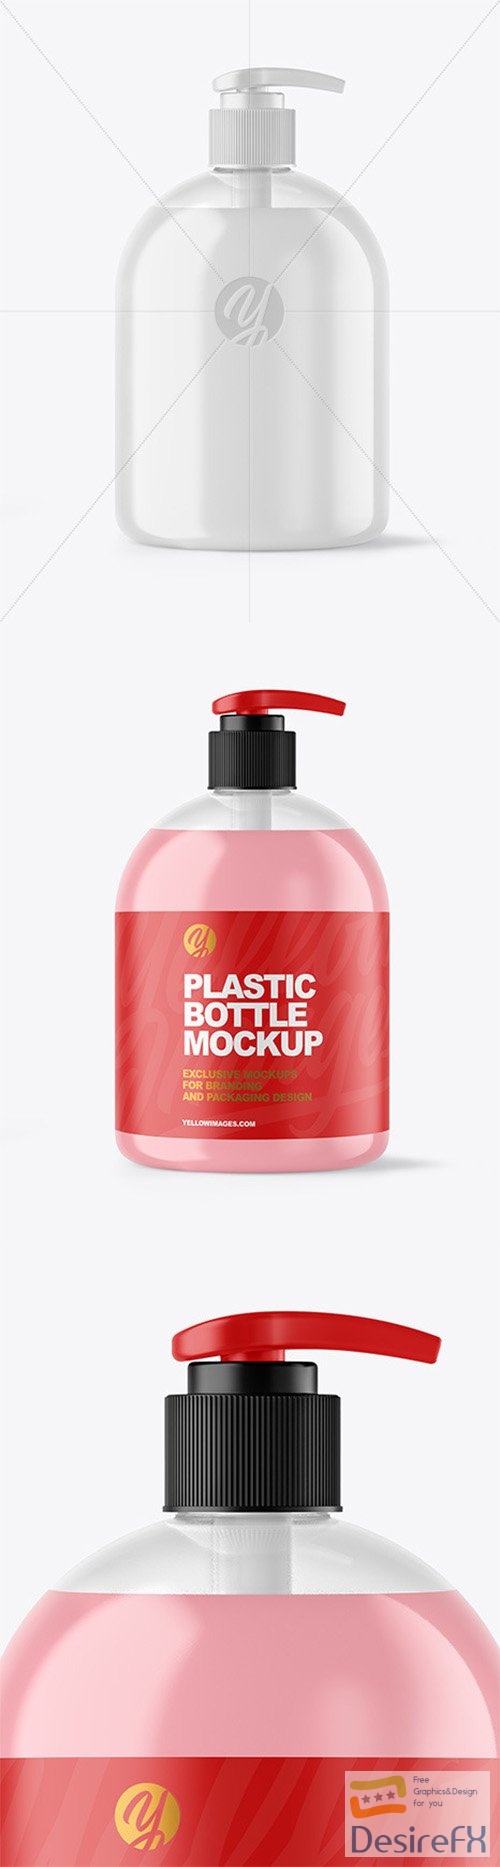 Clear Liquid Soap Bottle with Pump Mockup 62140 TIF